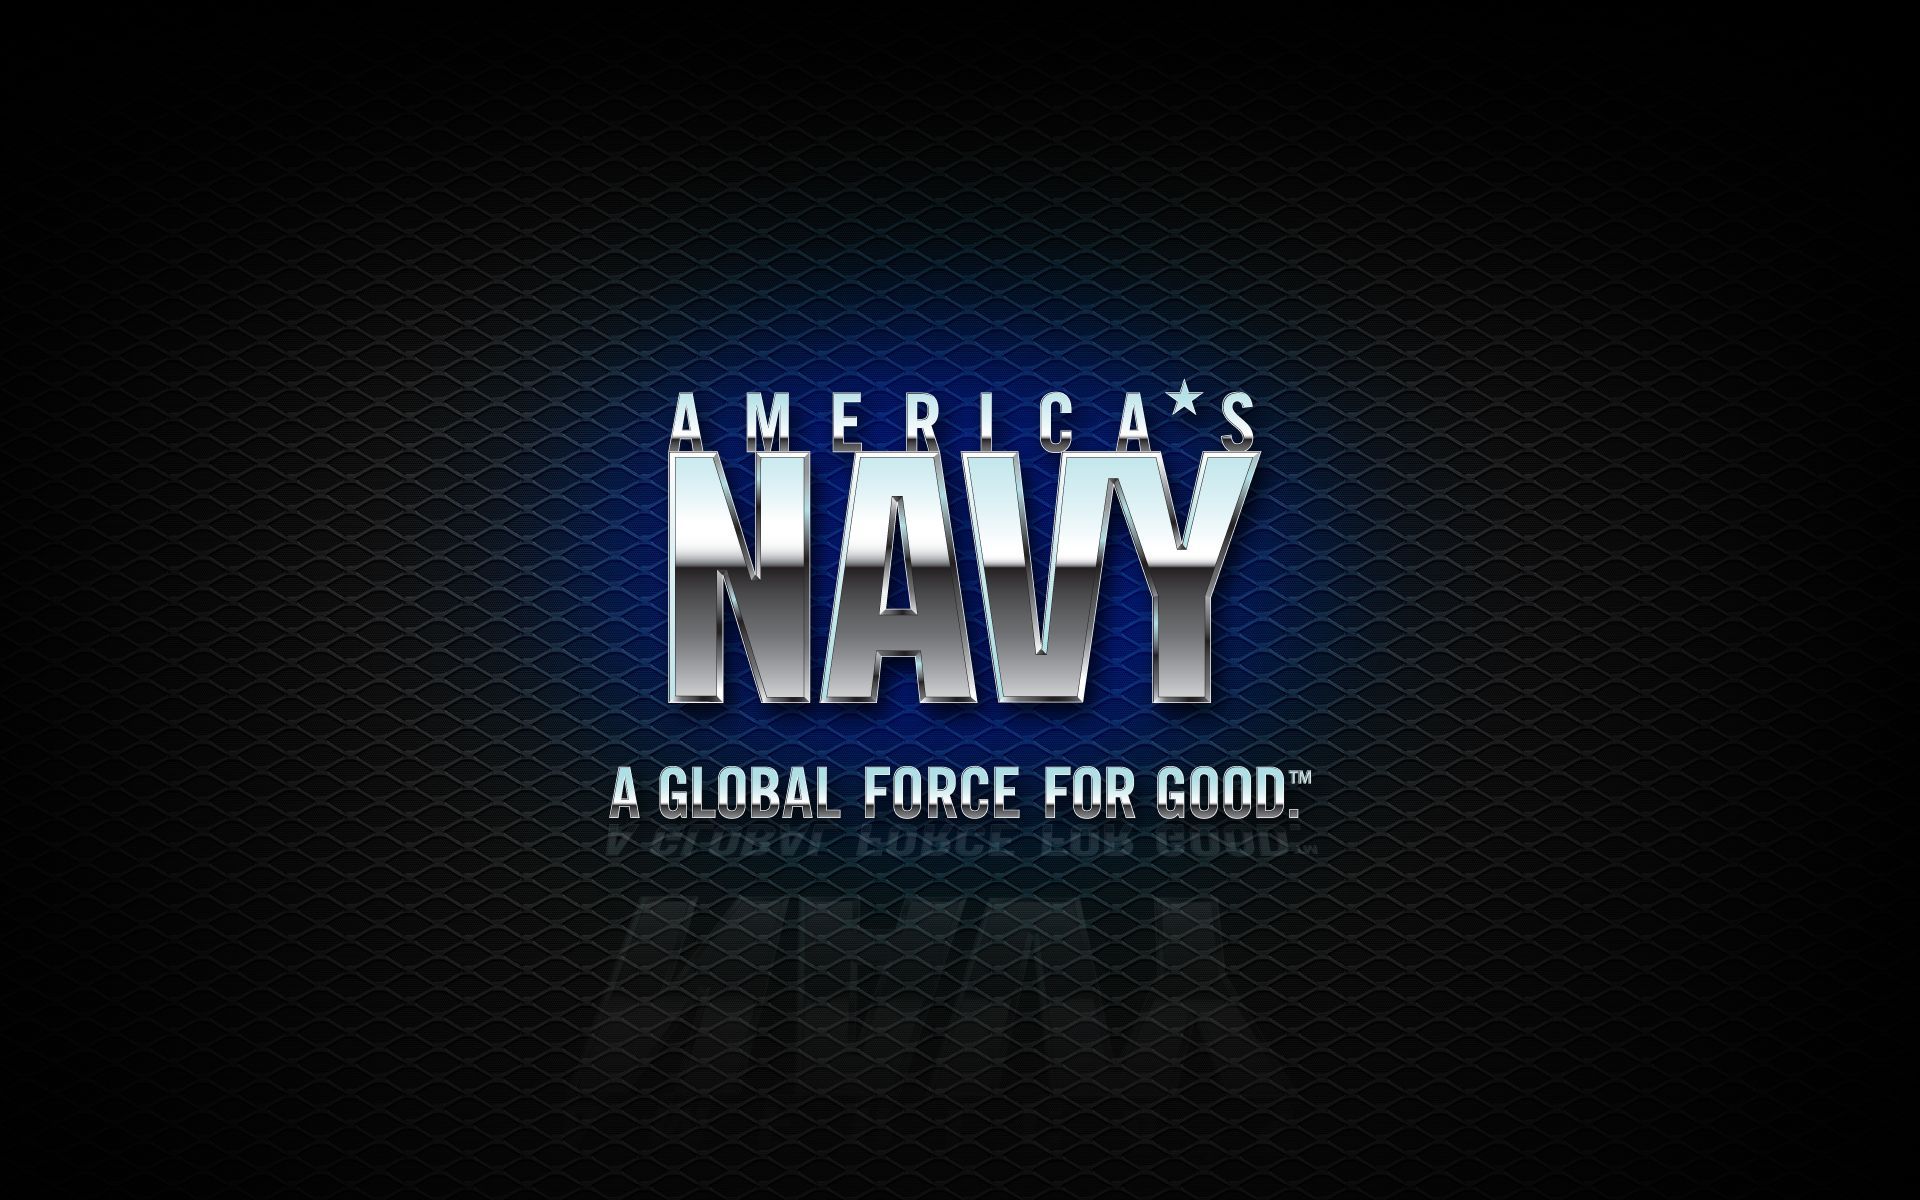 United States Navy wallpaper. Smartphone x 960 JPG, 396